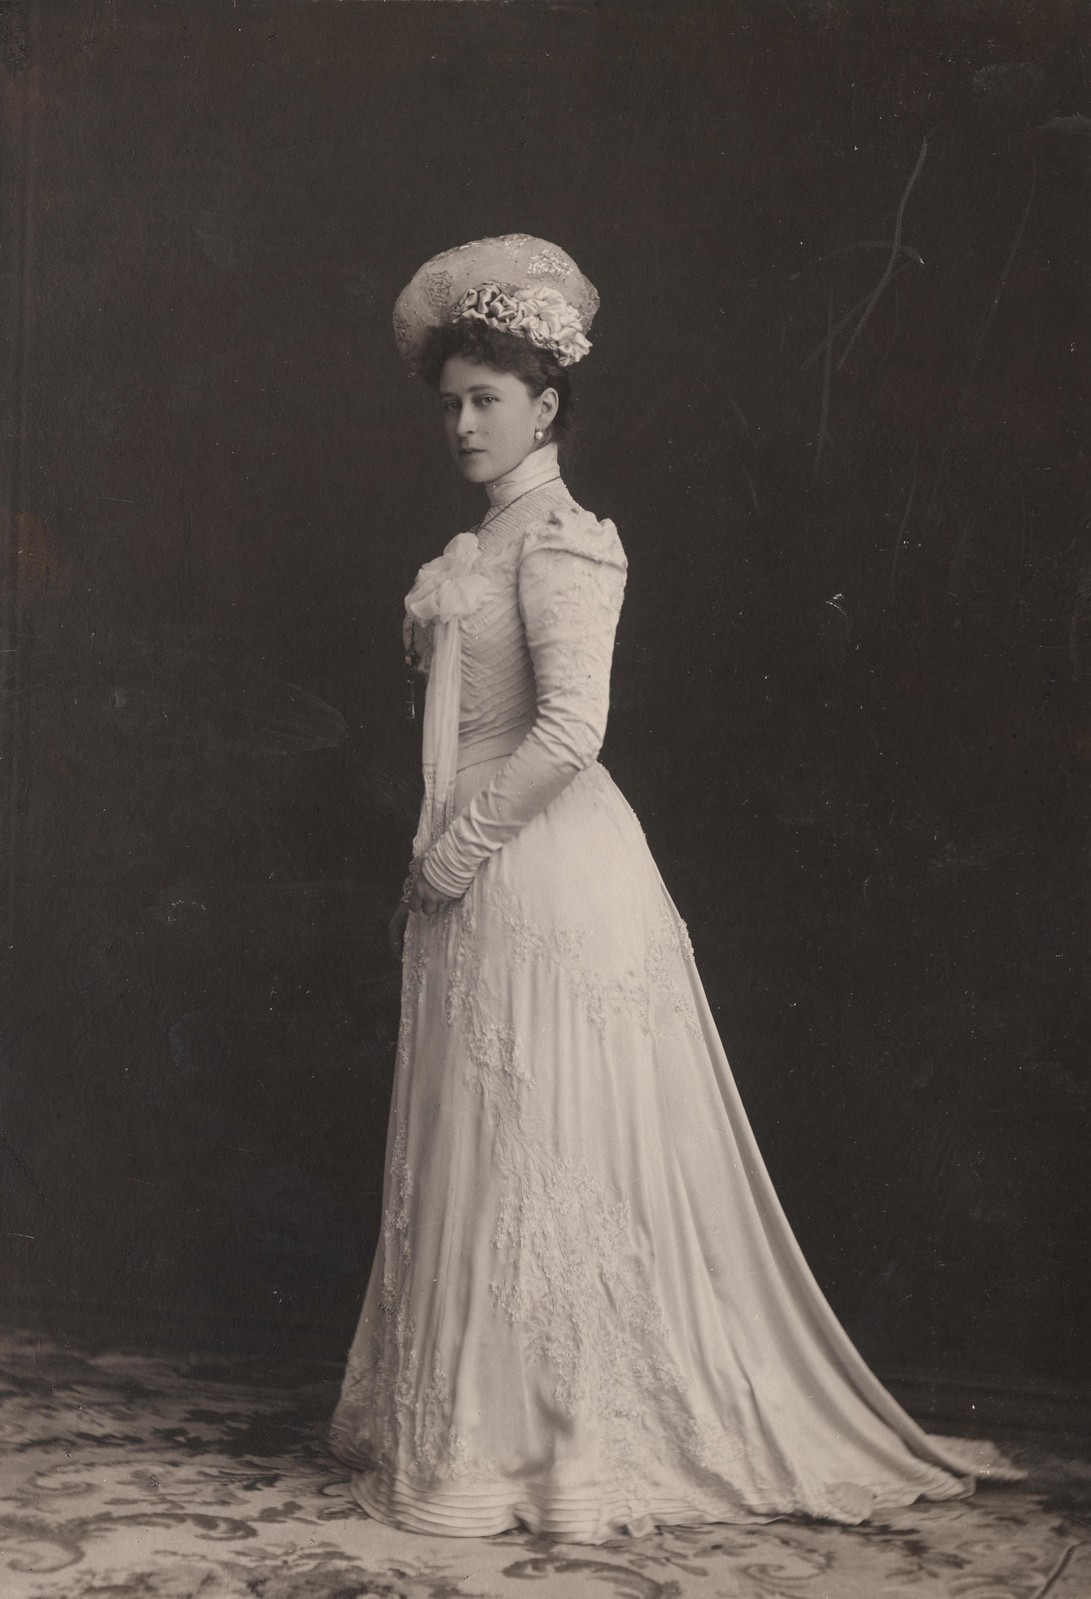 Grand duchess of russia. Елисавета Феодоровна Романова.